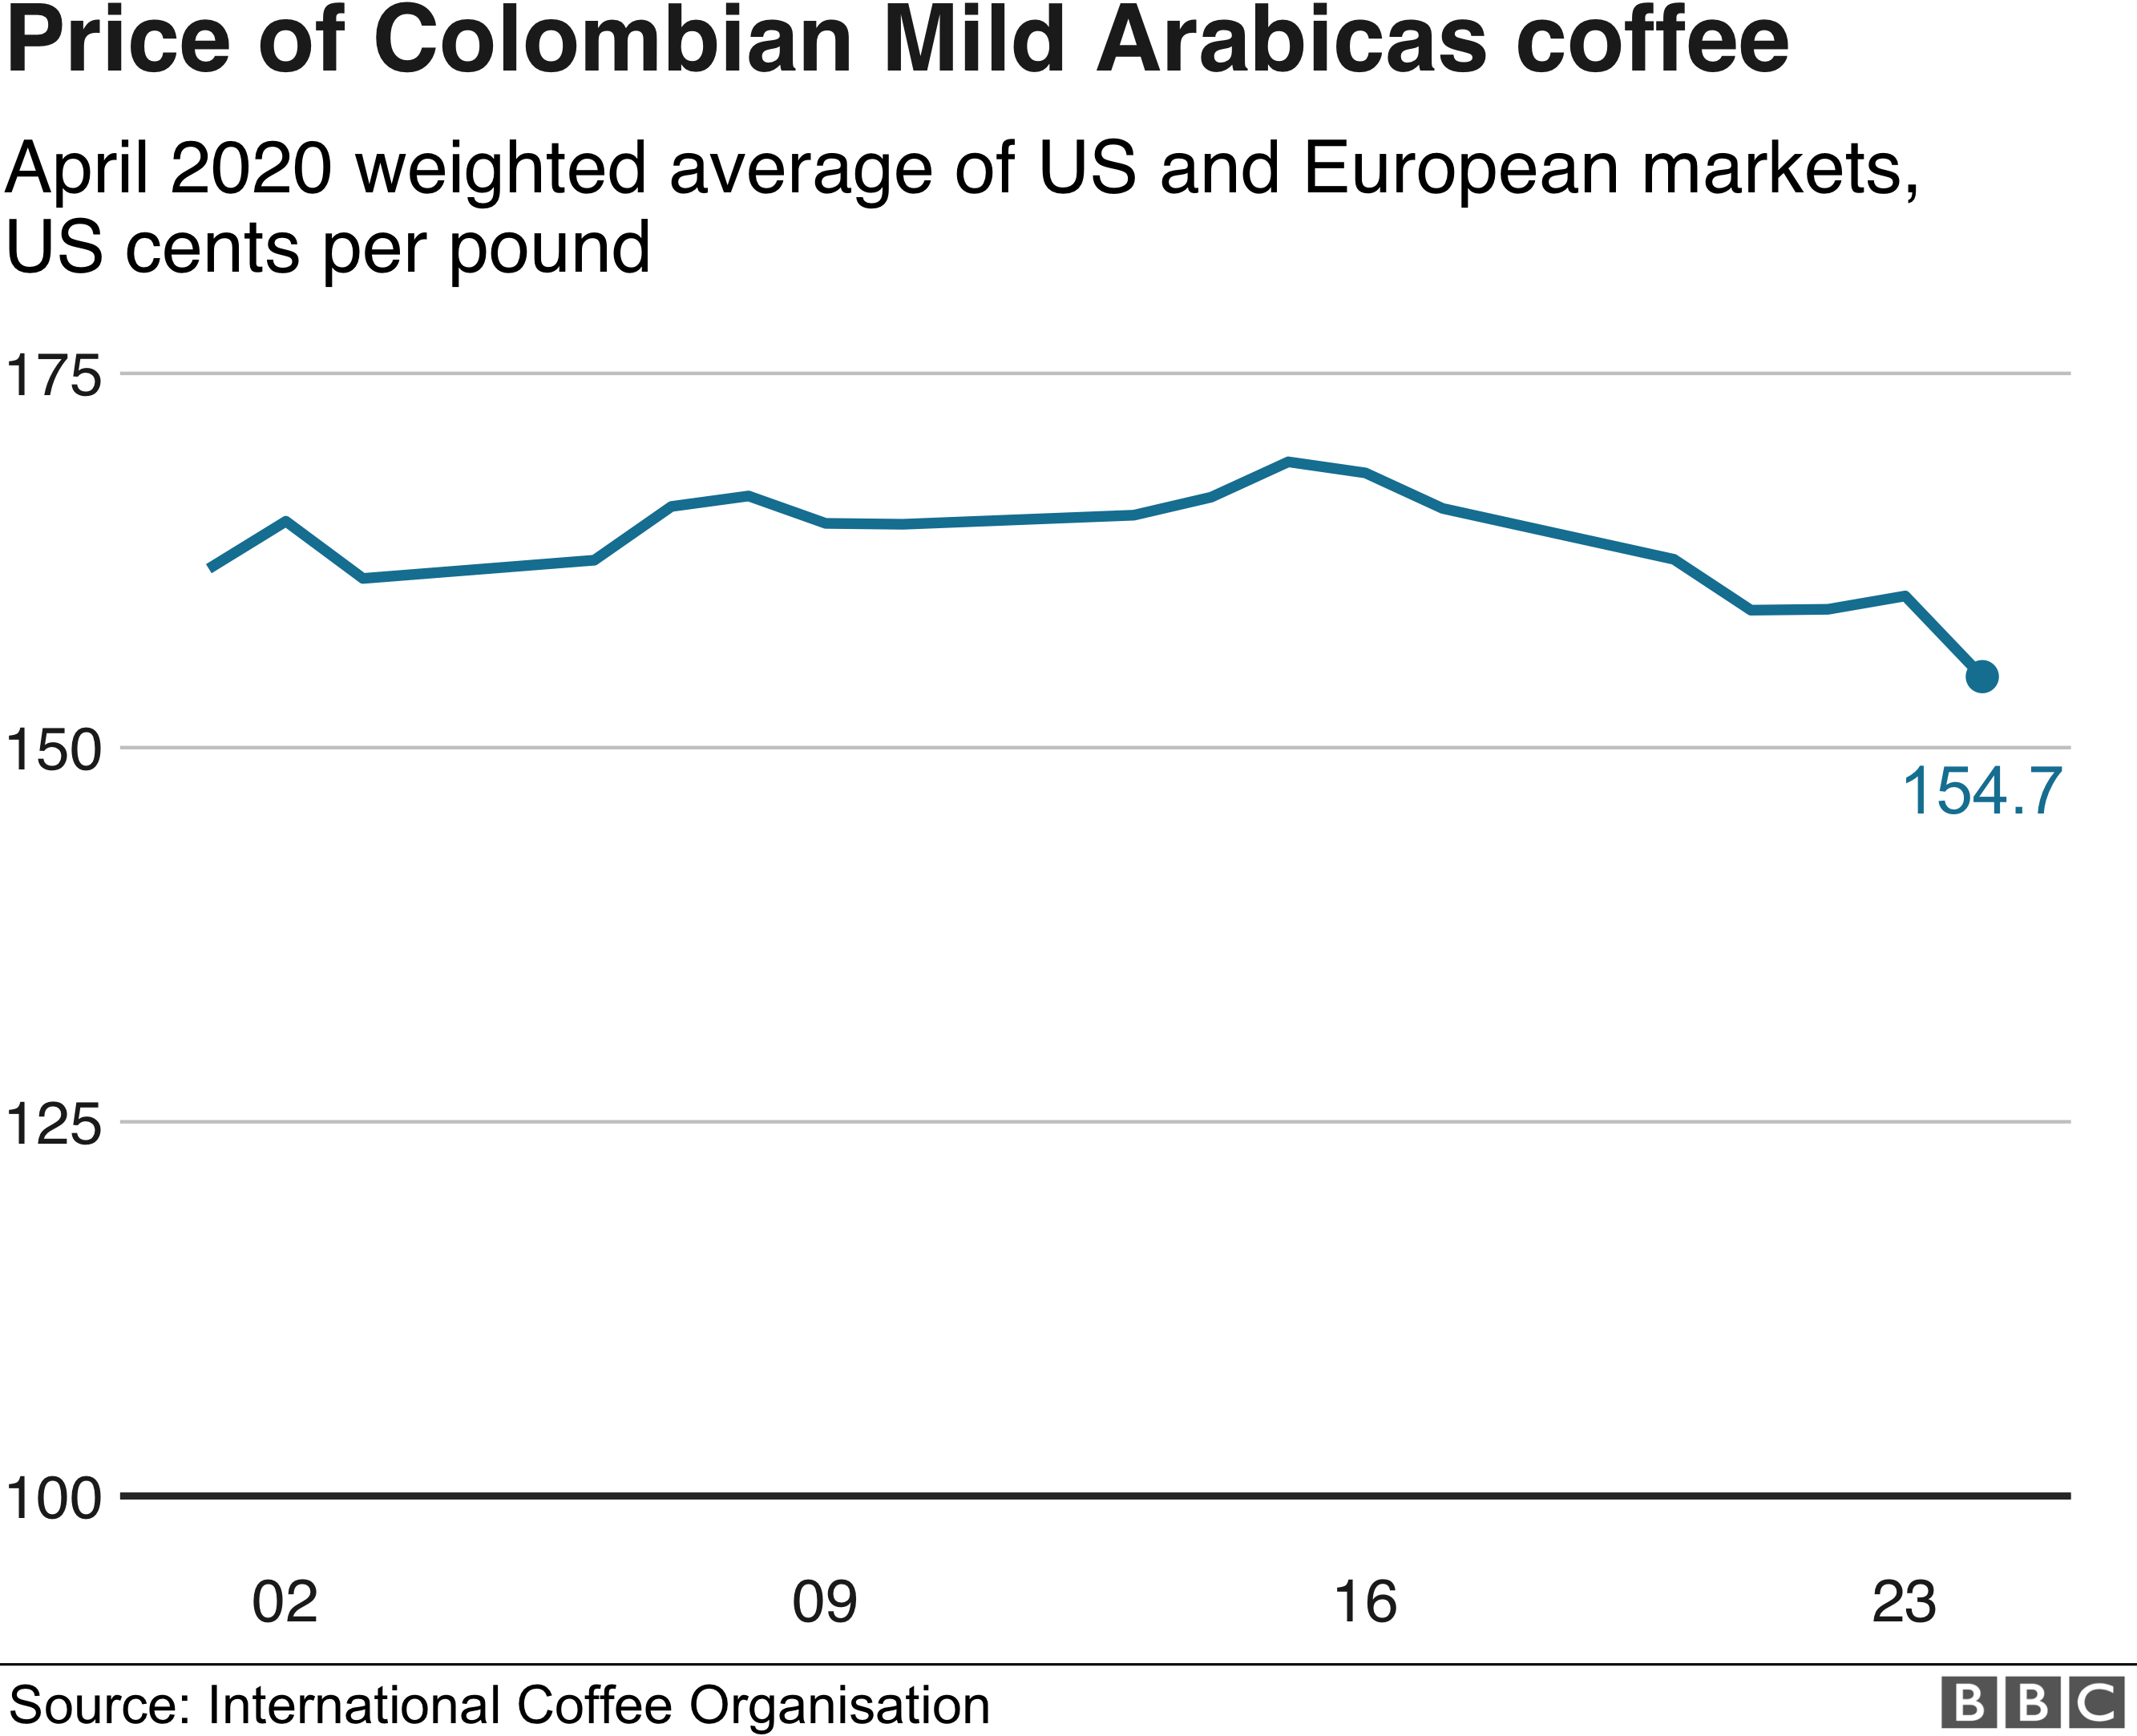 Coffee price